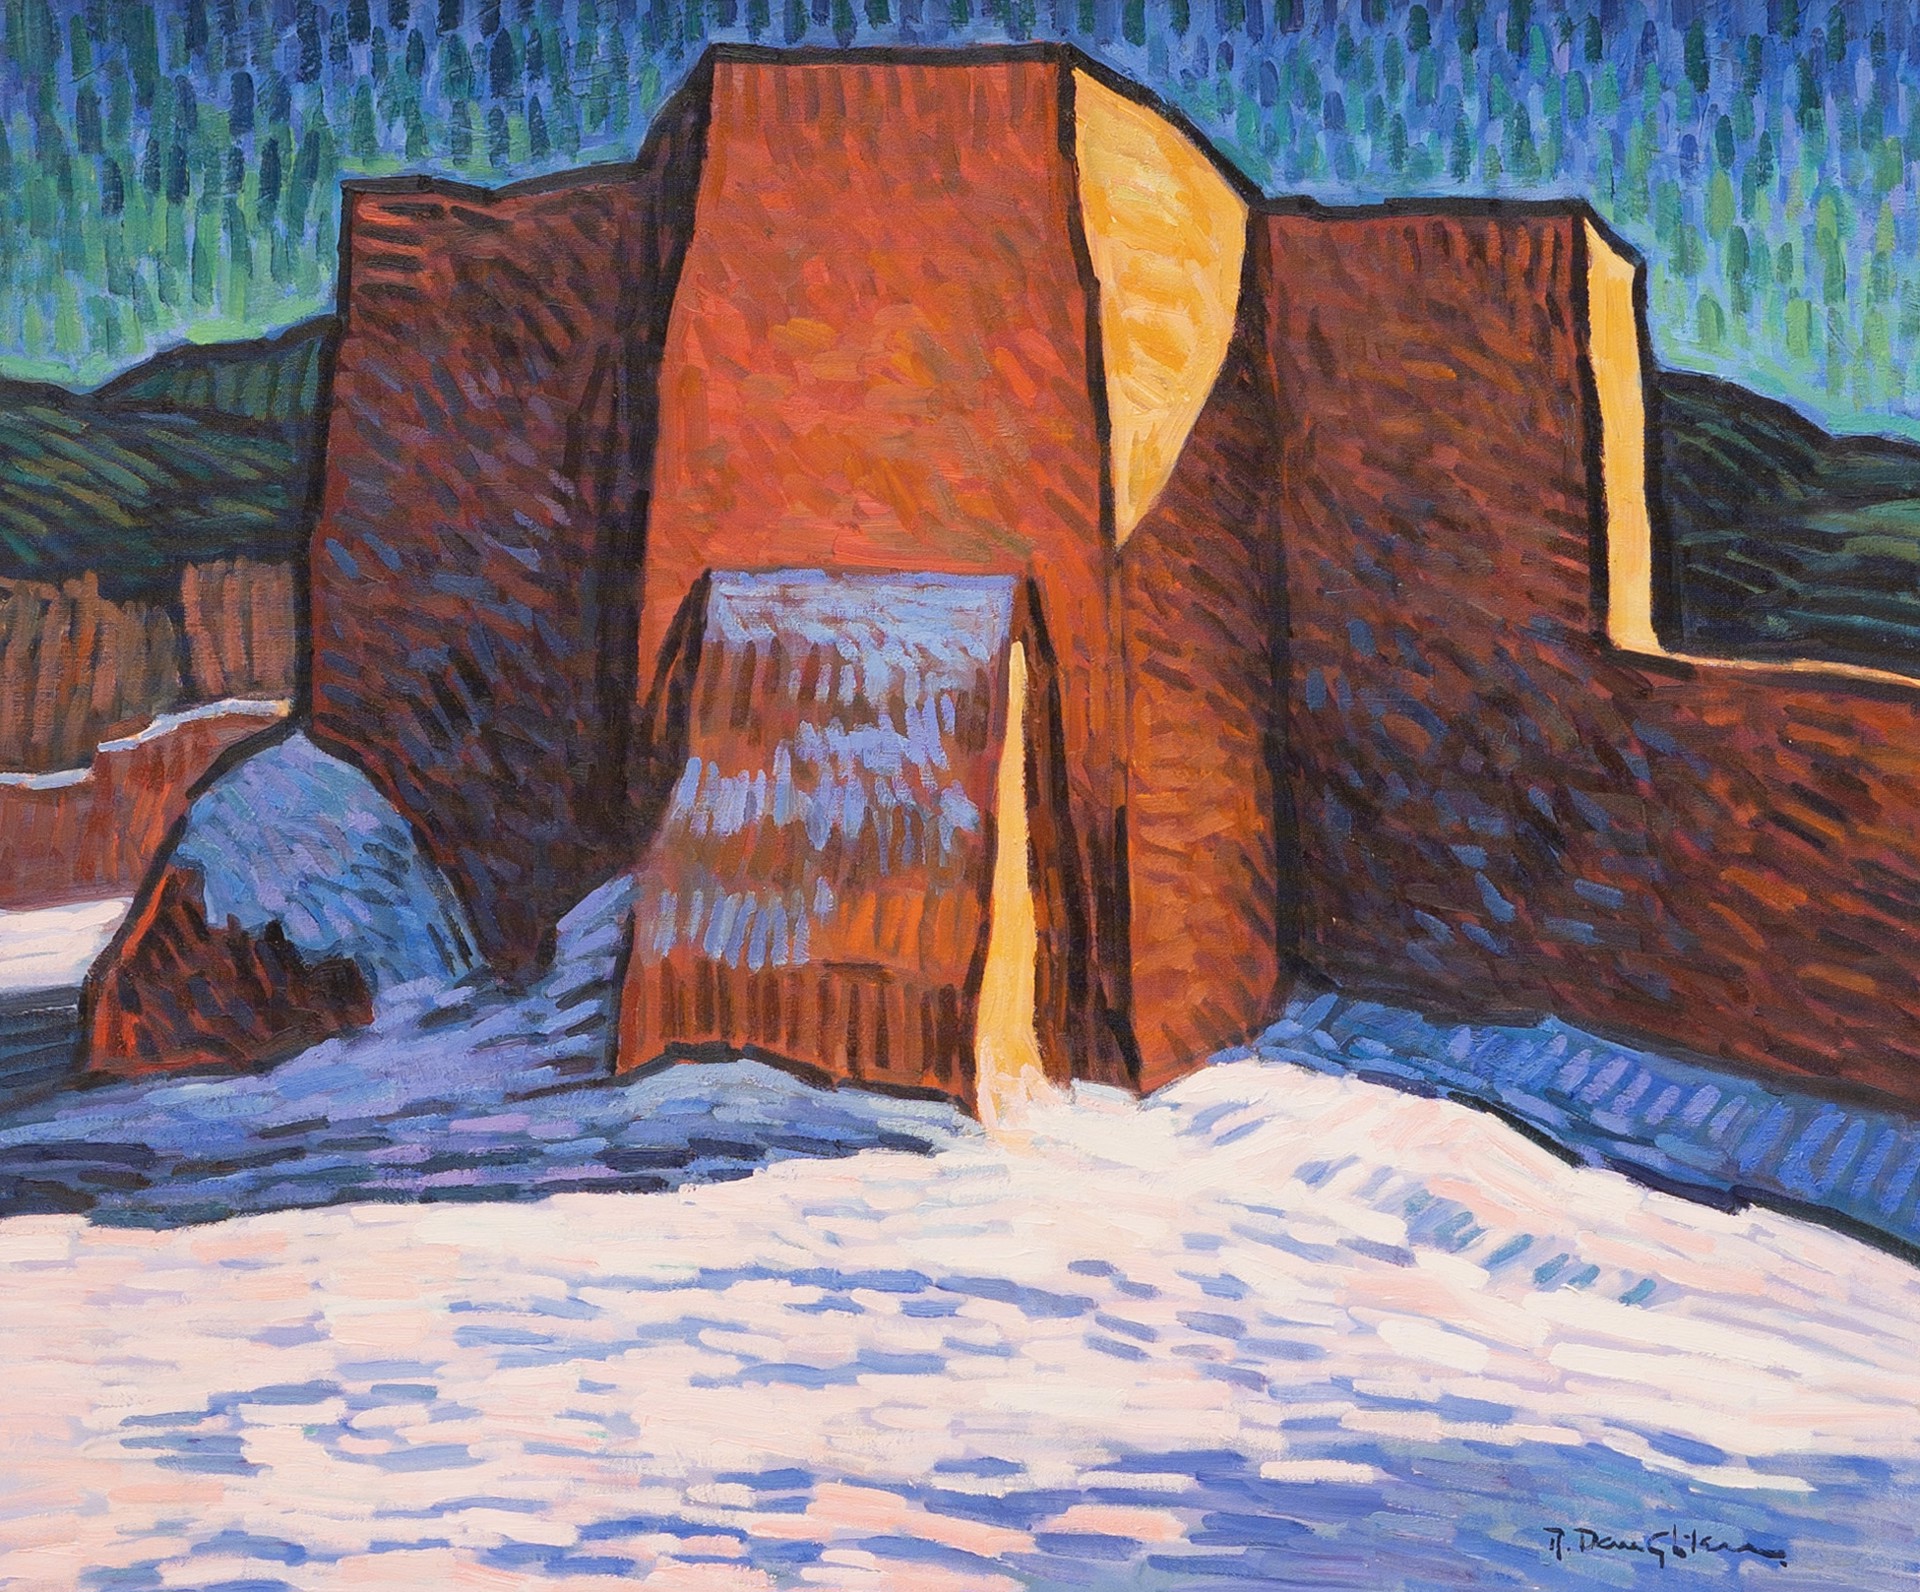 Ranchos Winter by Robert Daughters (1929-2013)